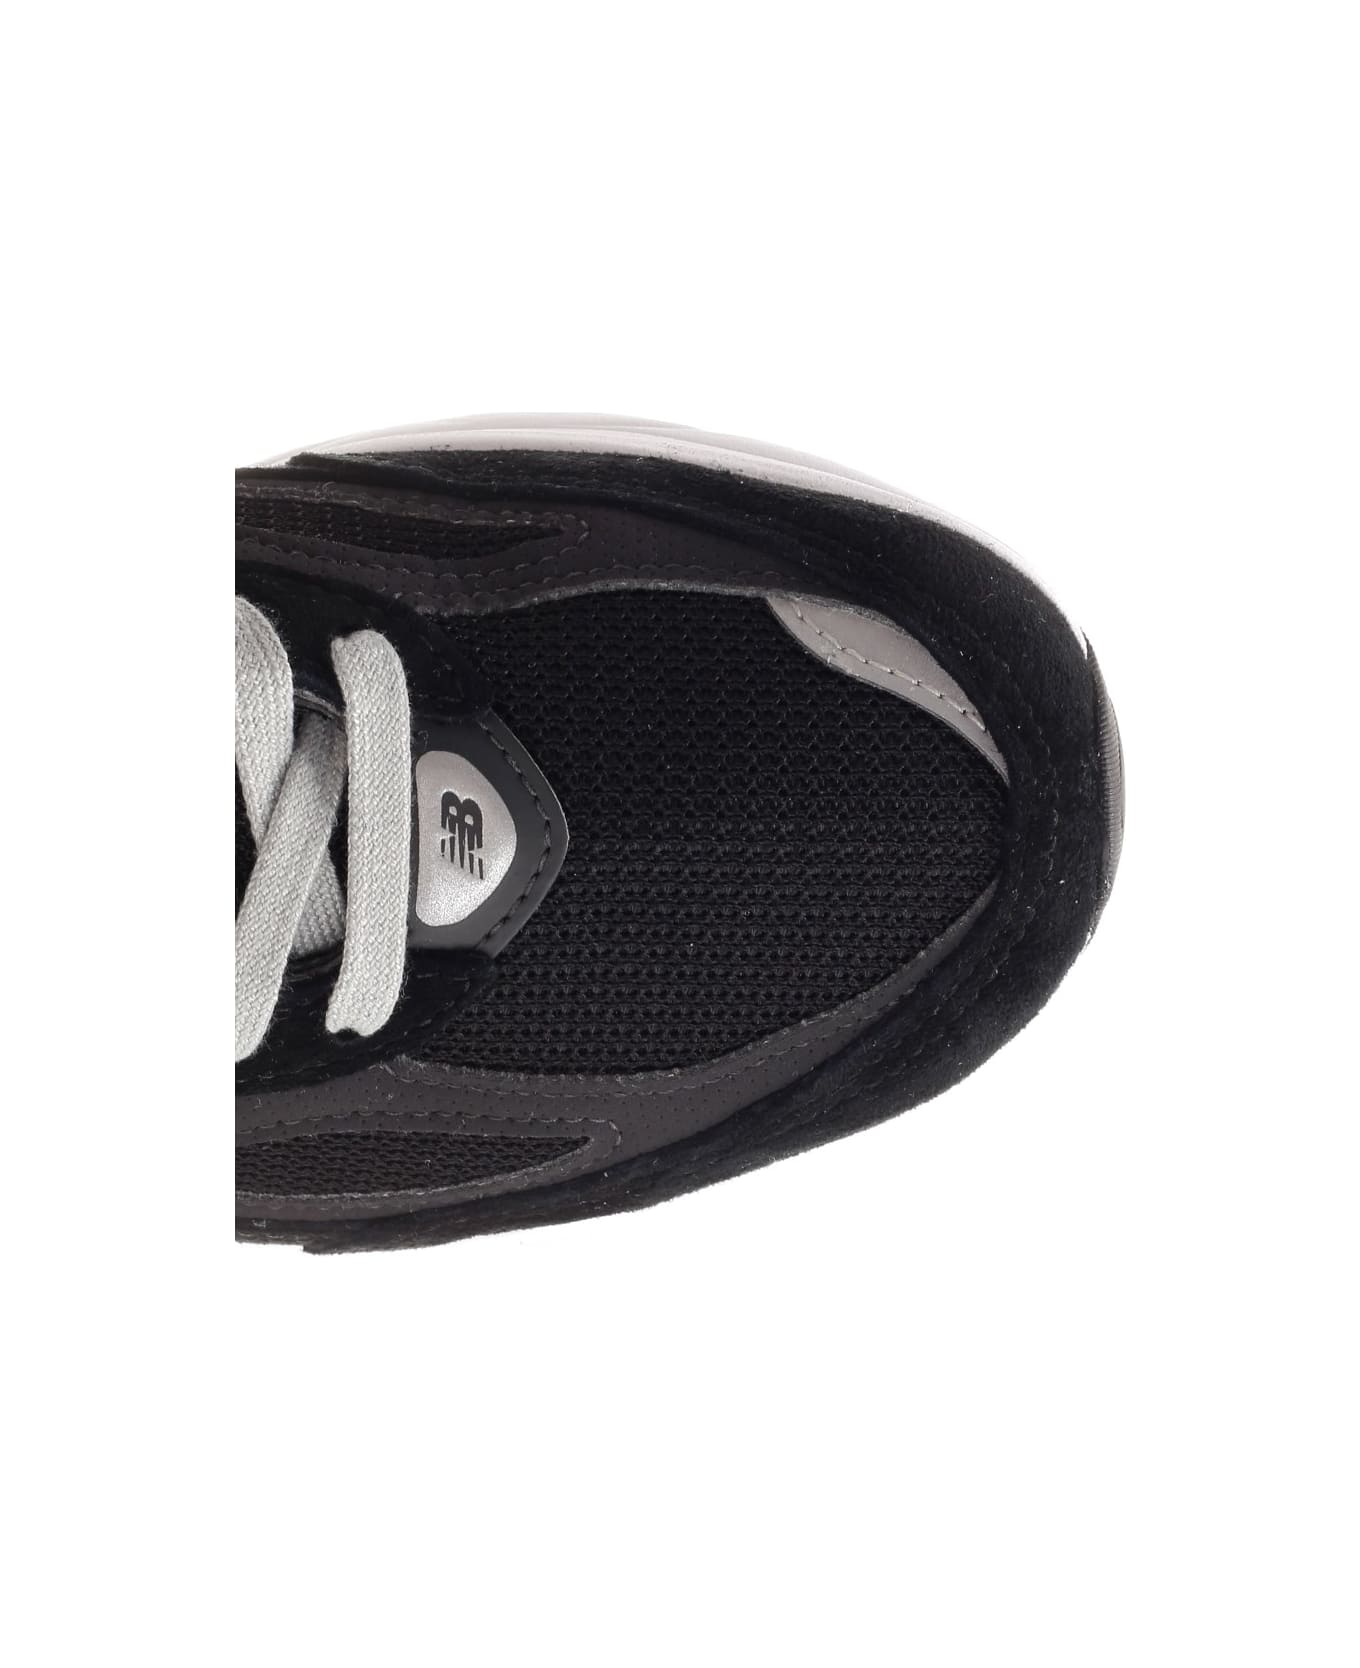 New Balance Black '990' Sneakers - Black